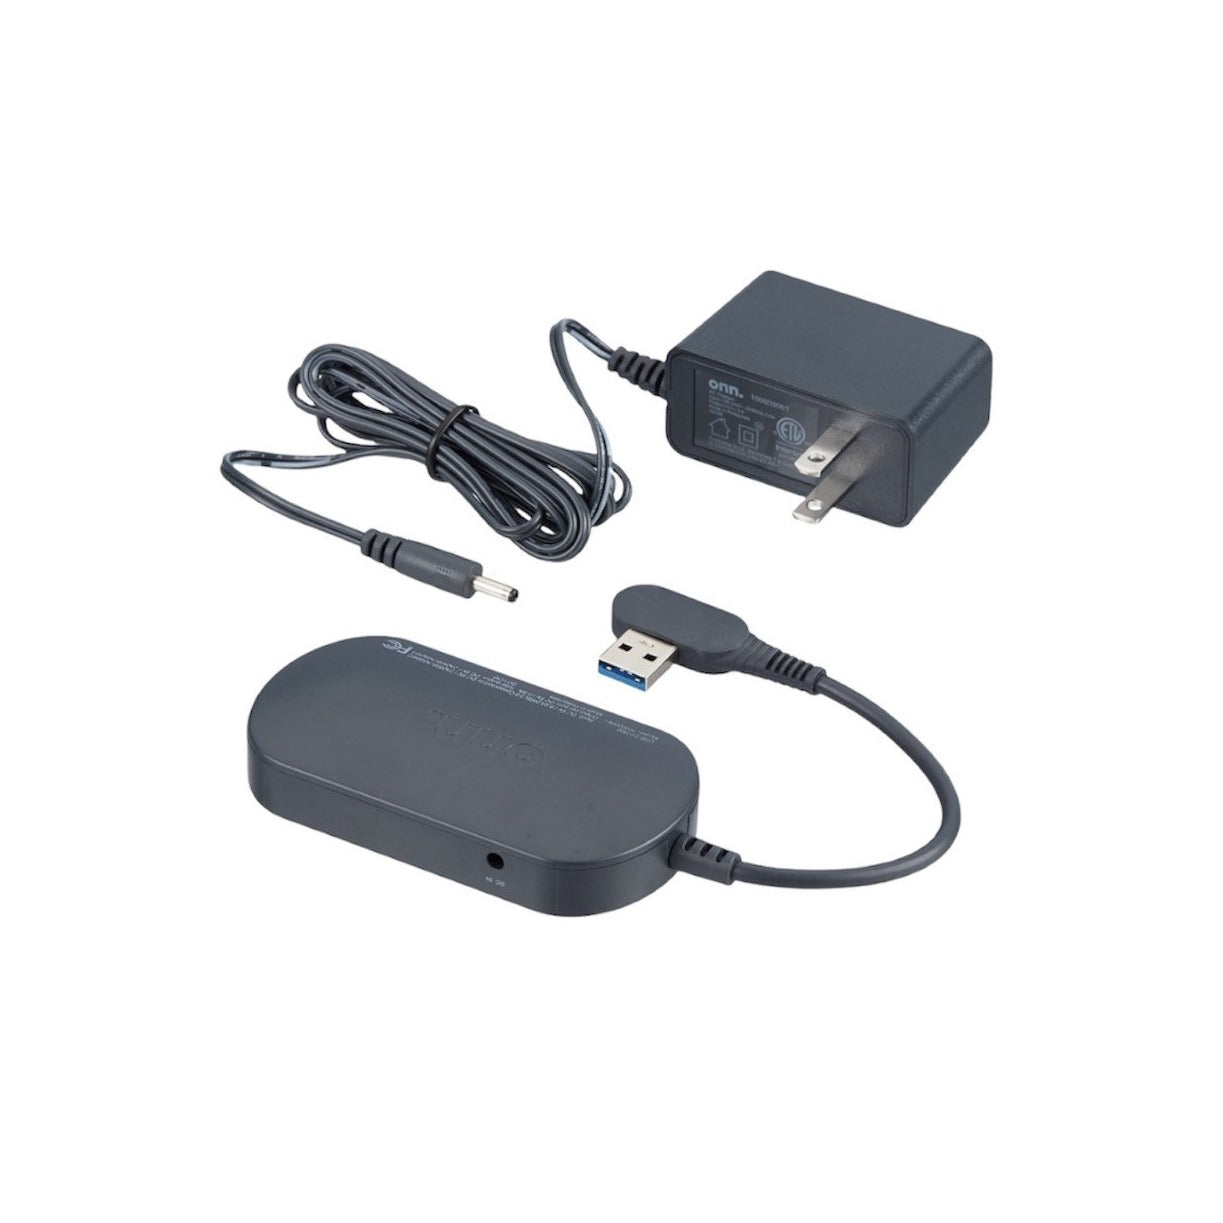 Surf Onn Powered USB 3.0 Hub With 4 USB 3.0 Ports 5 Gbps Data Transfer